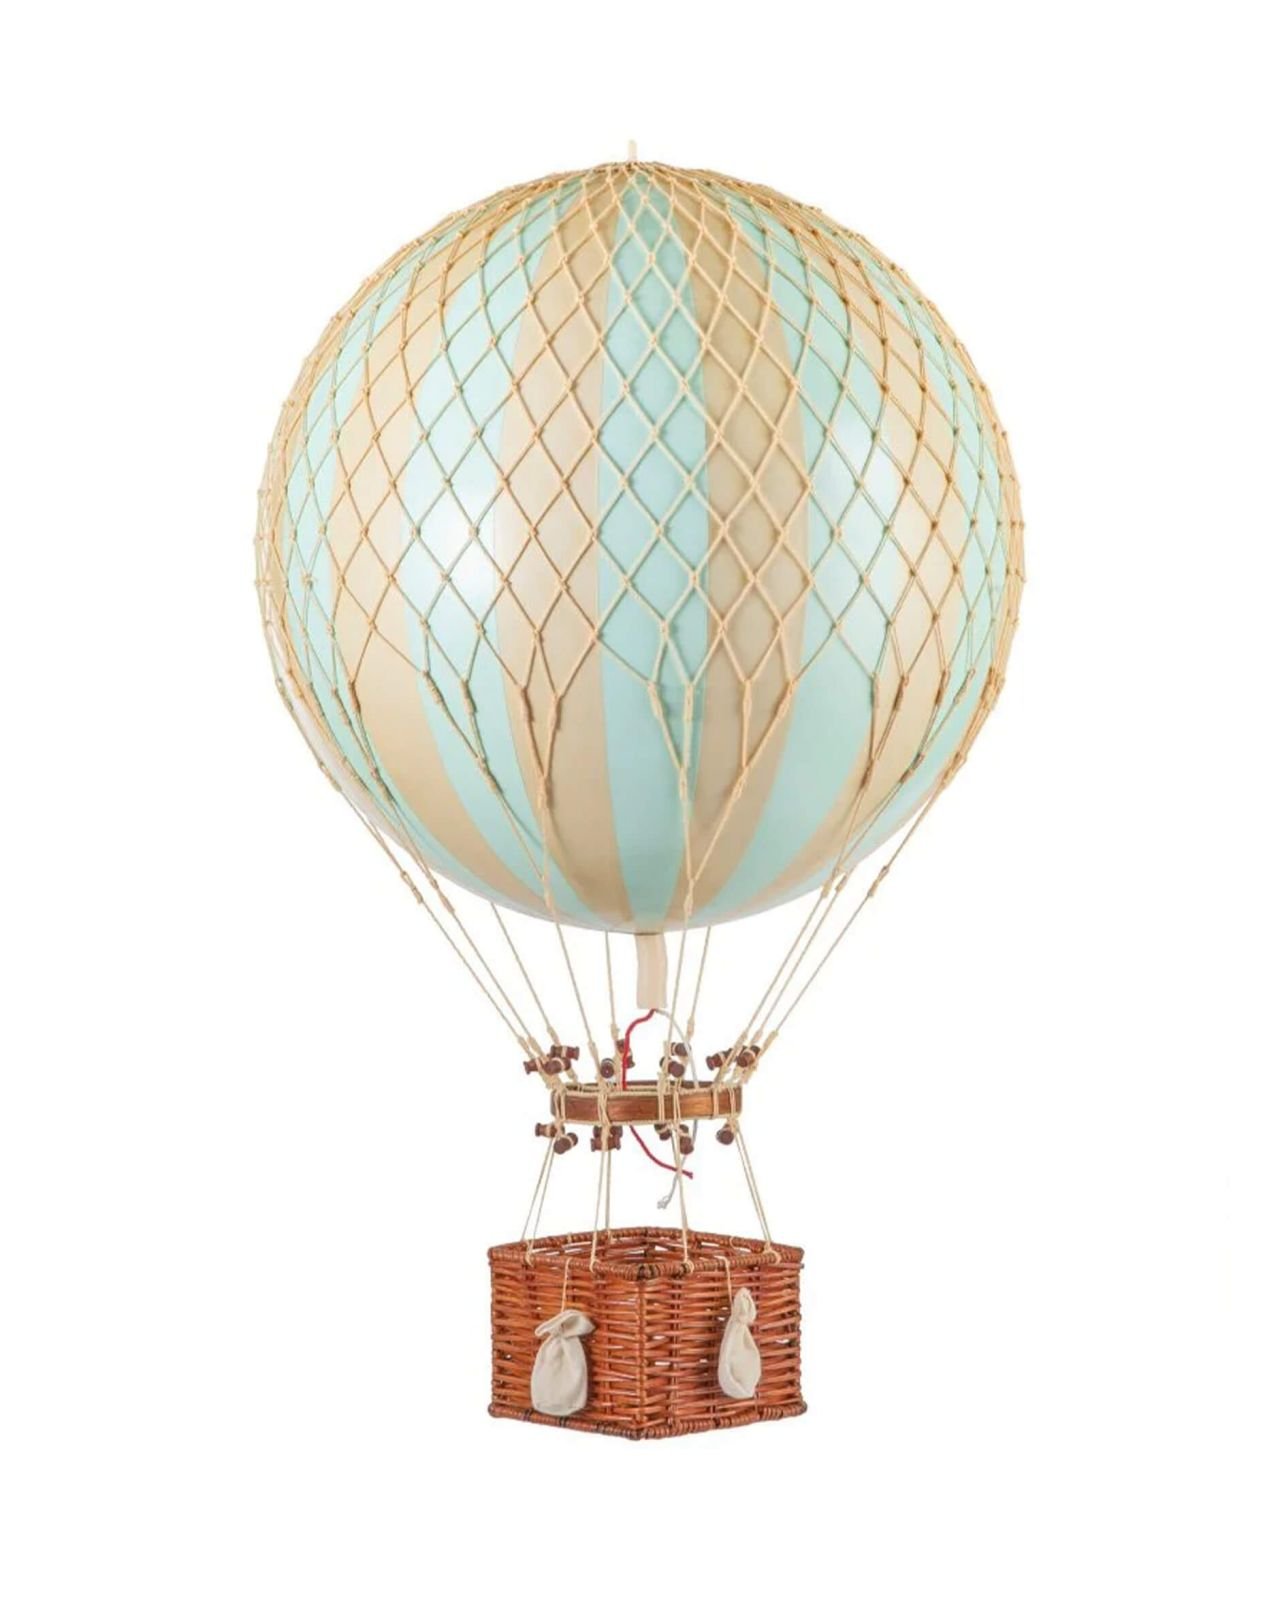 Jules Verne hot air balloon mint